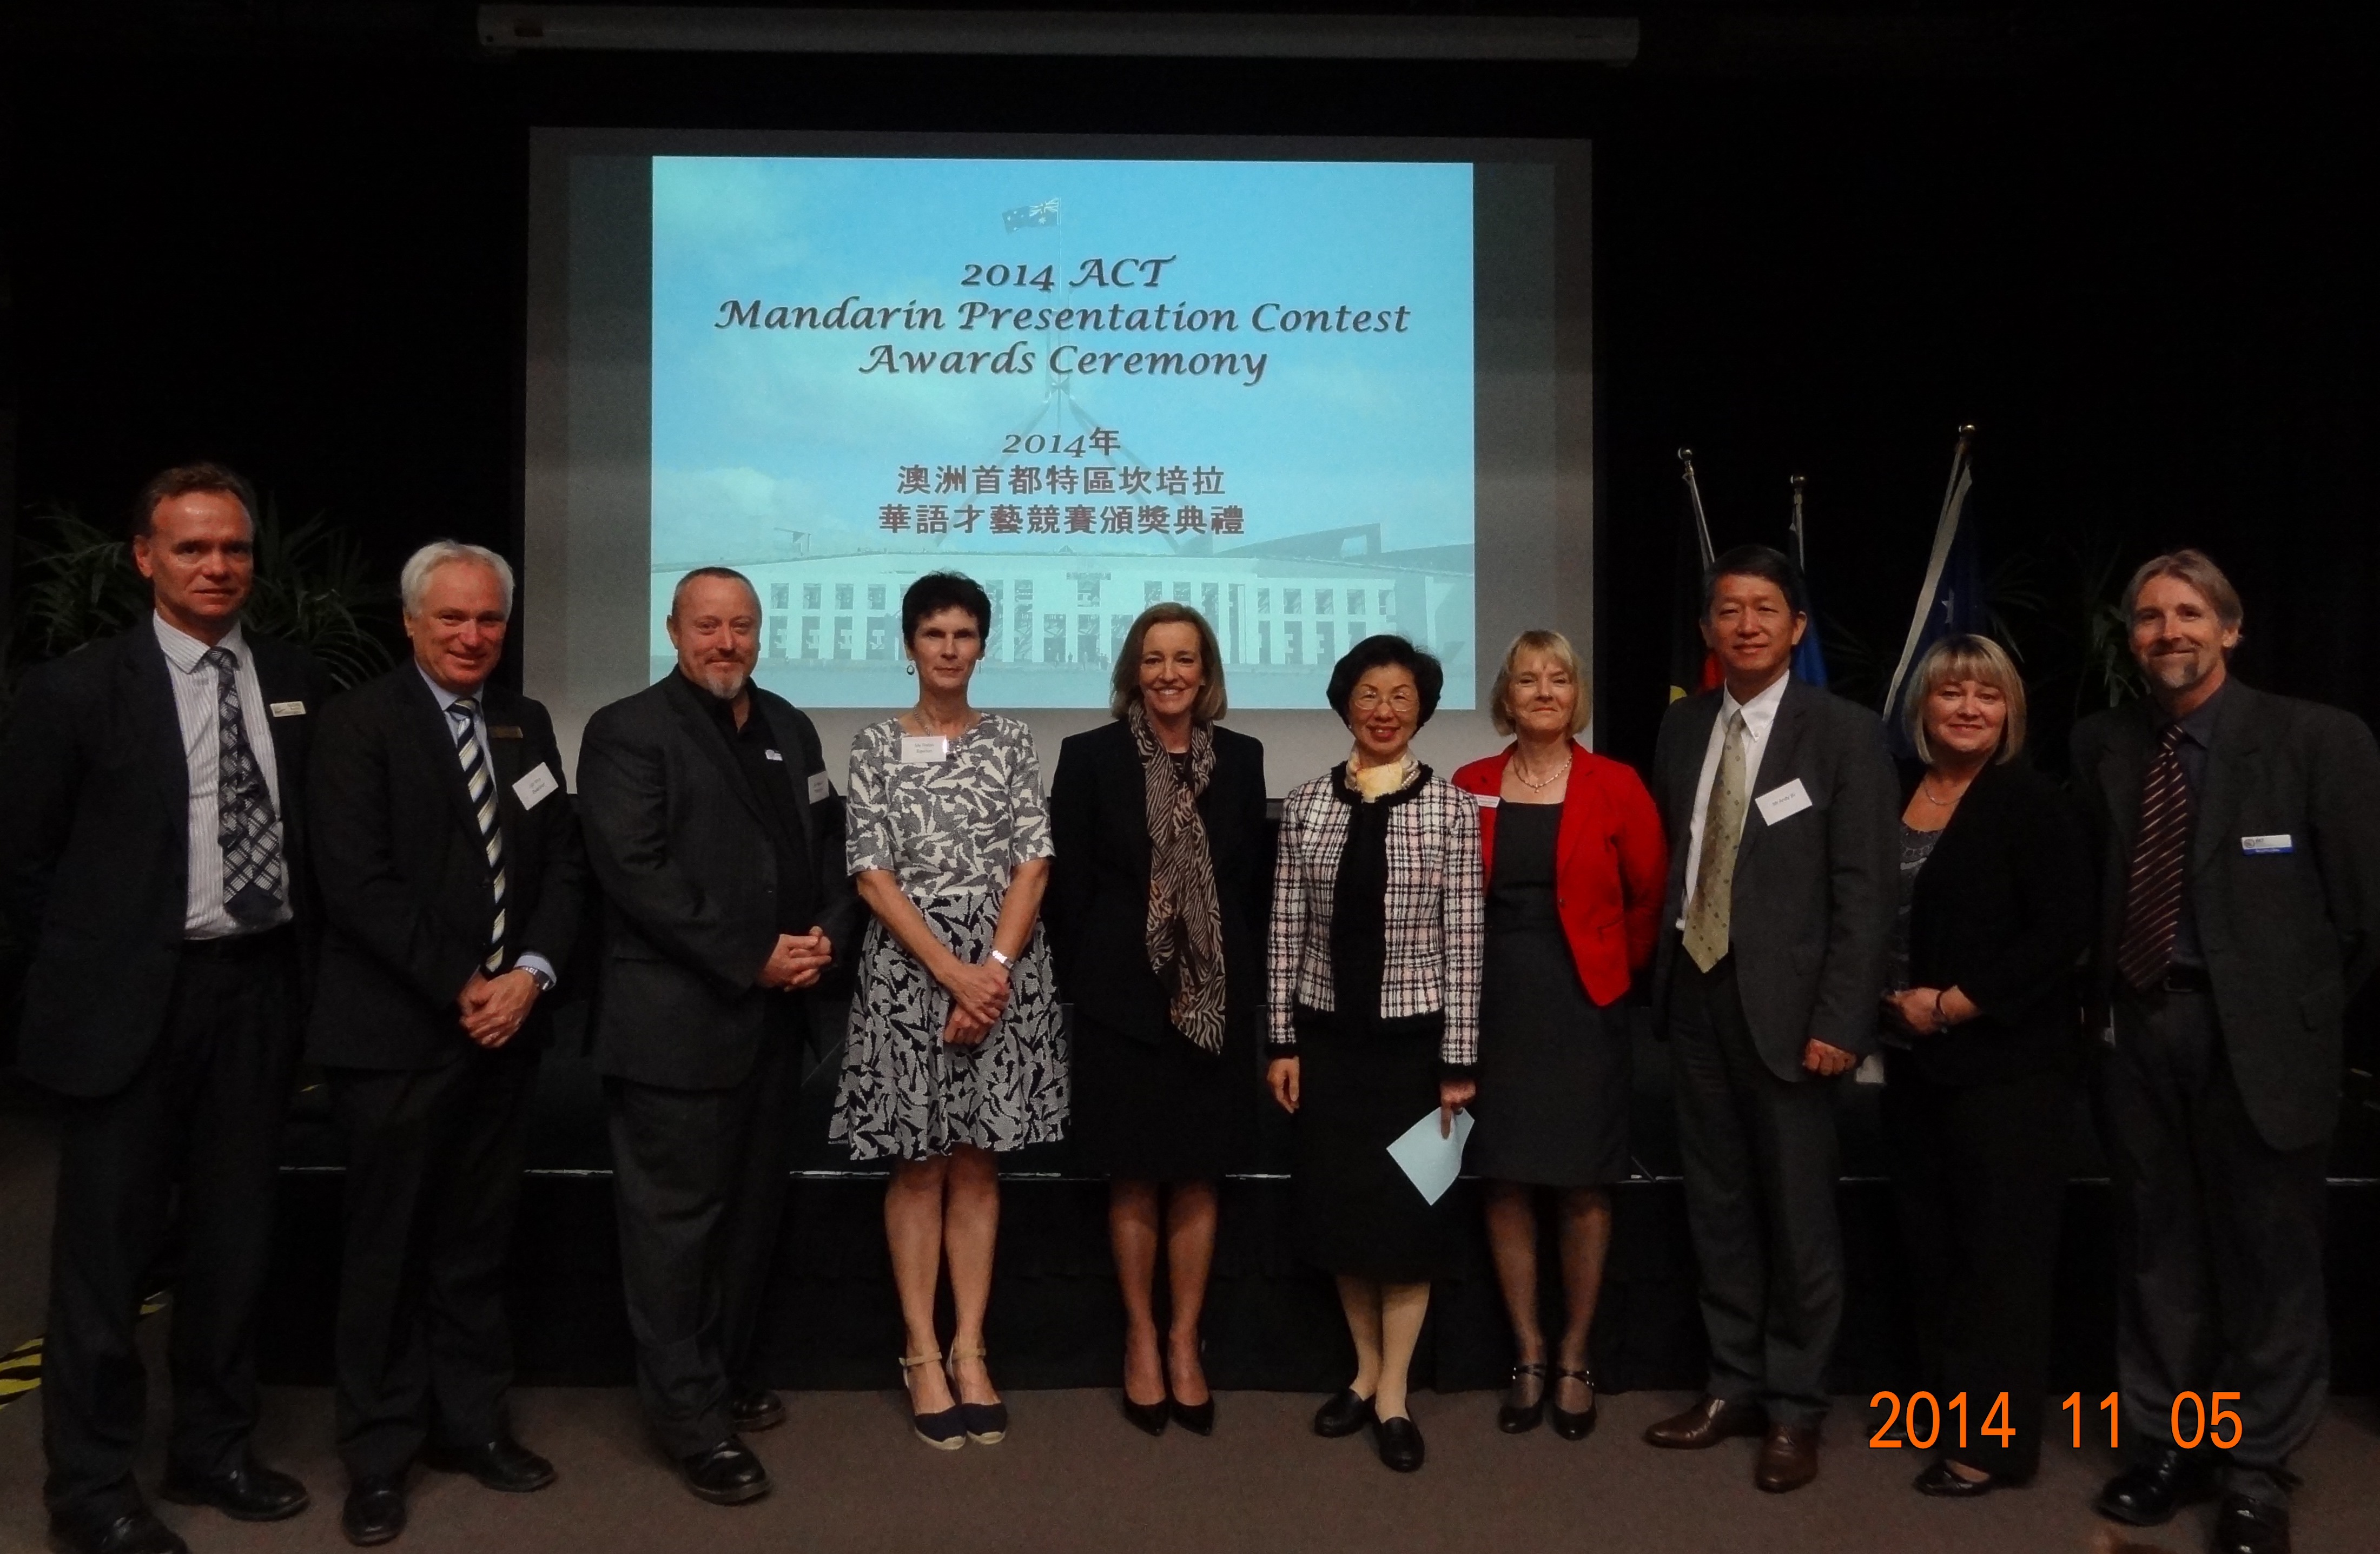 2014 ACT Mandarin Presentation Contest Award Ceremony held in Australia